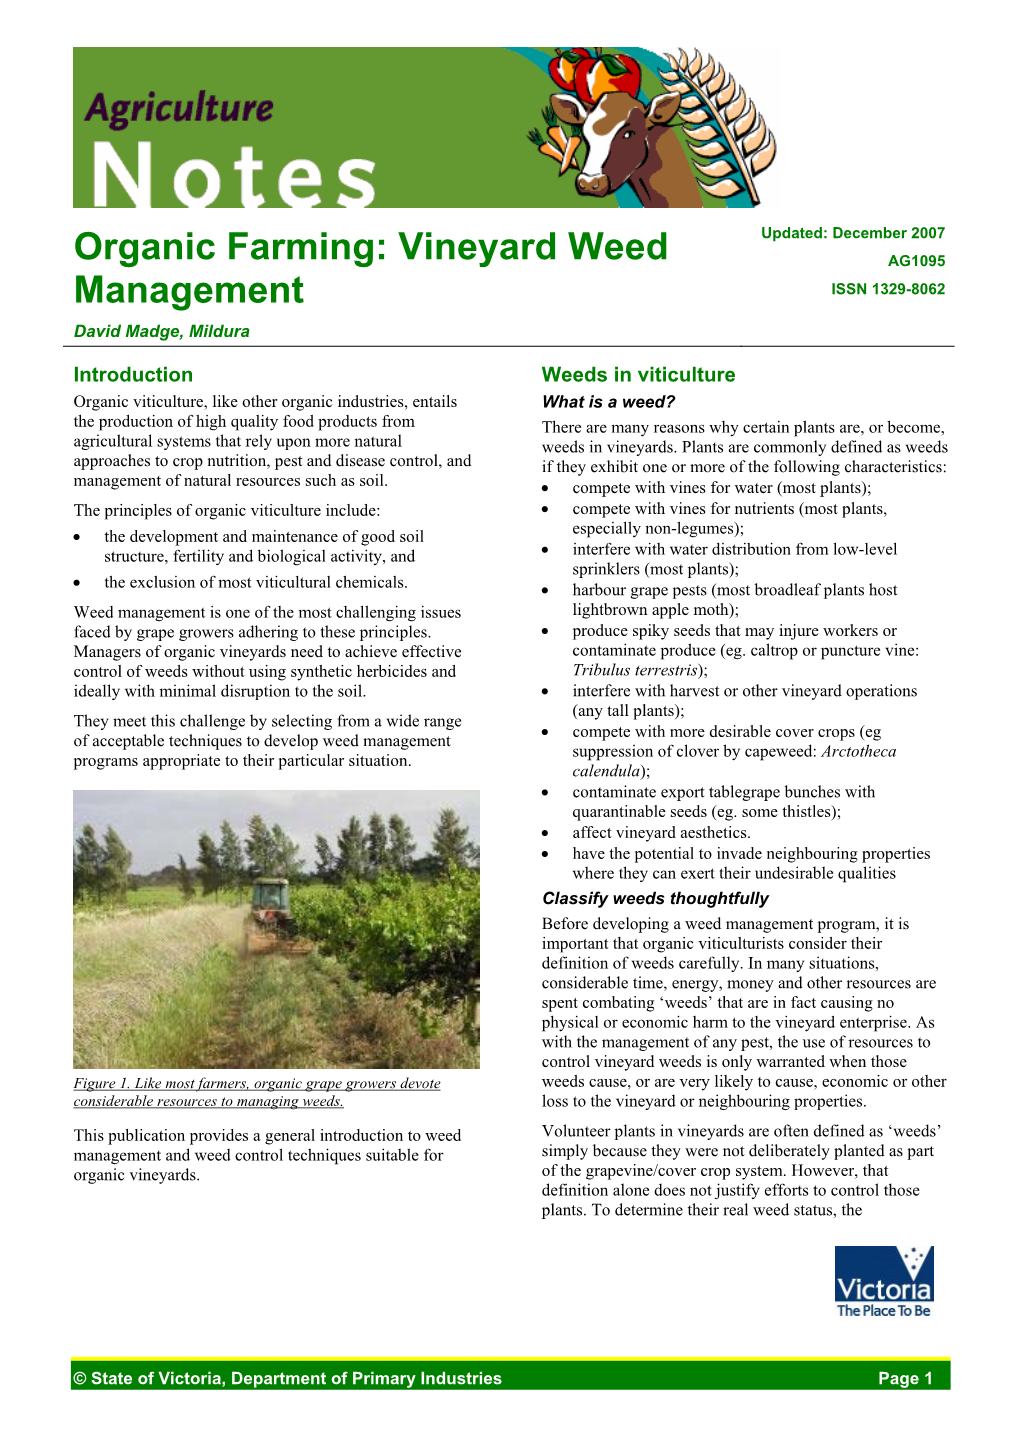 Vineyard Weed Management